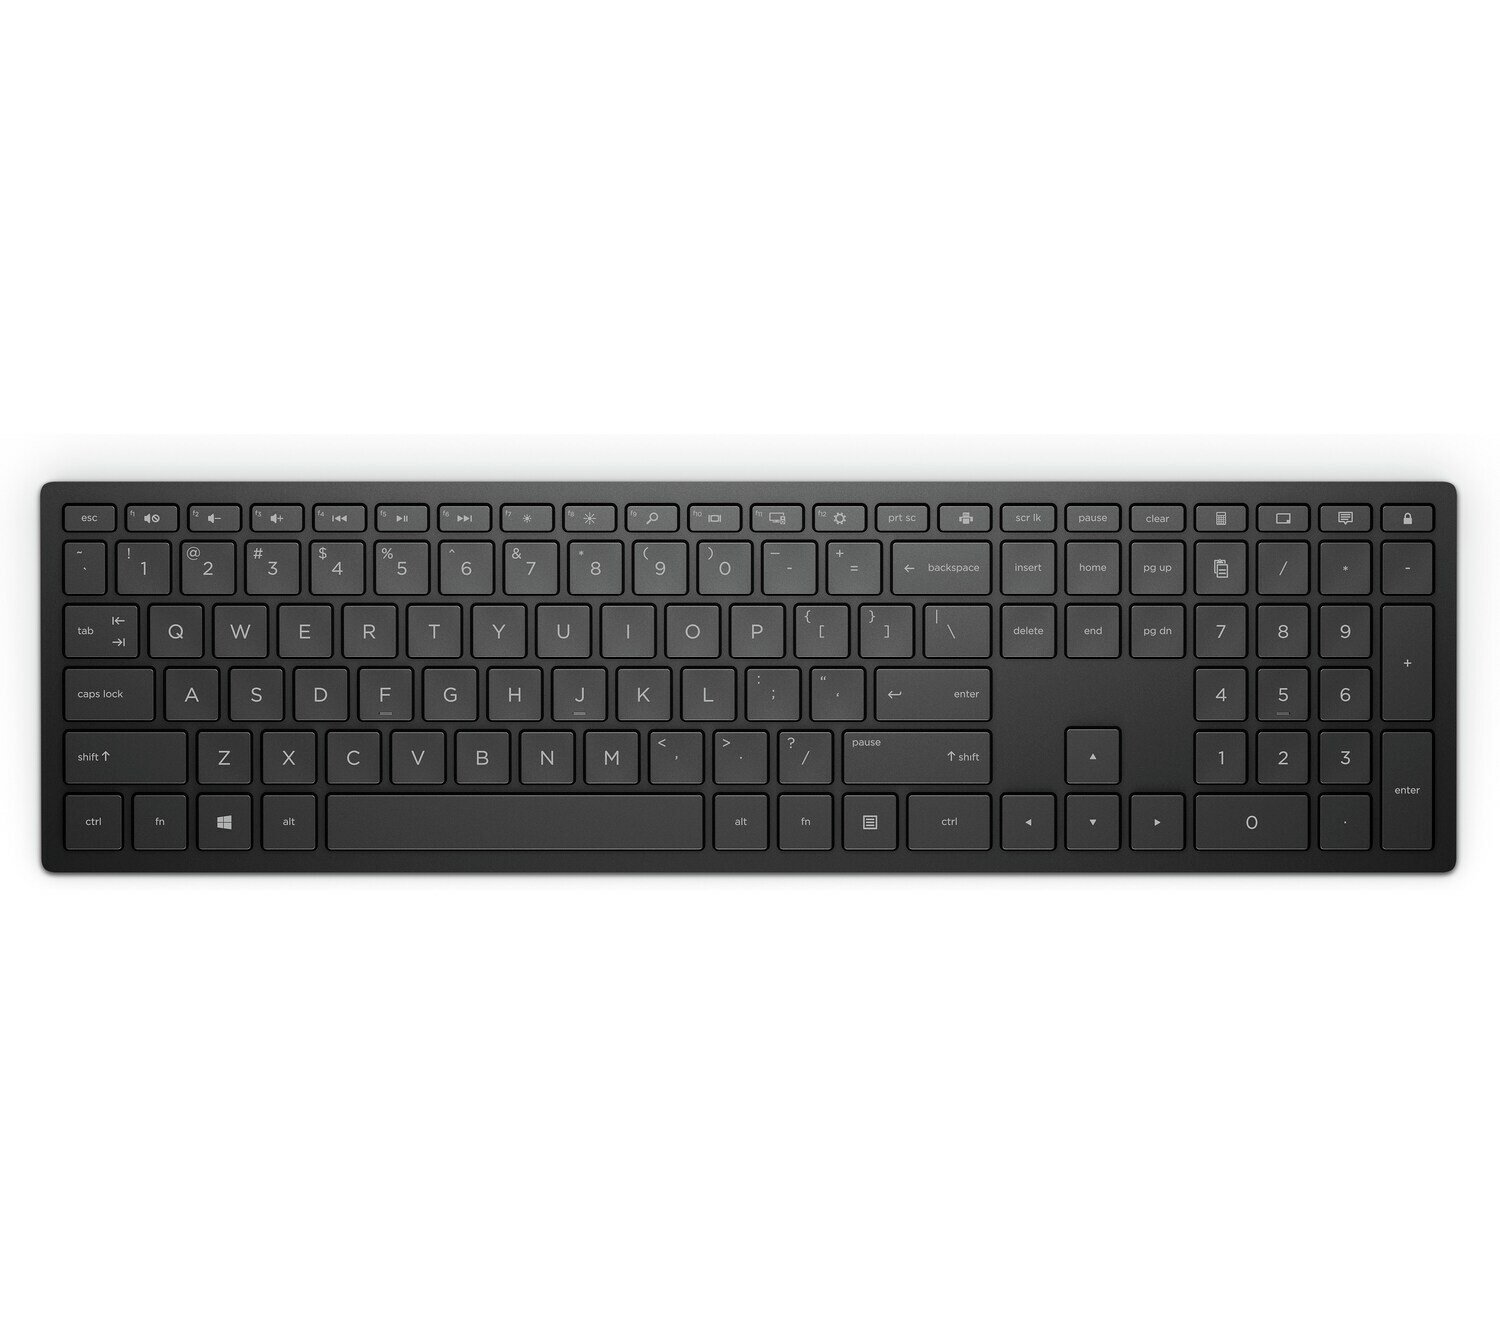 HP 600 Pavillion Wireless Keyboard Review